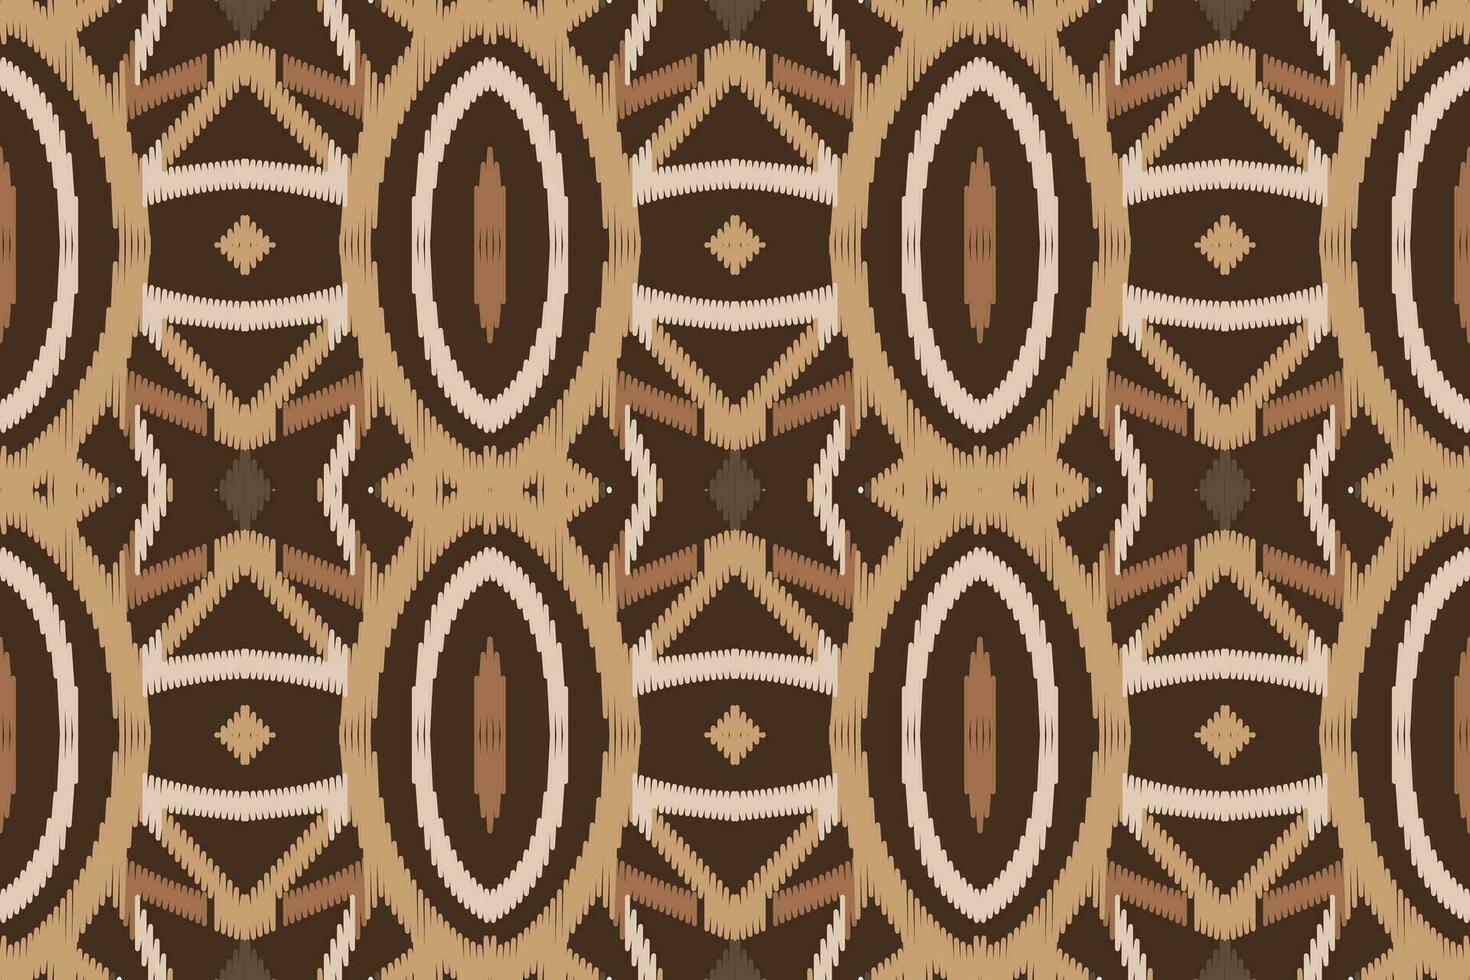 ikat tela cachemir bordado antecedentes. ikat diseño geométrico étnico oriental modelo tradicional. ikat azteca estilo resumen diseño para impresión textura,tela,sari,sari,alfombra. vector